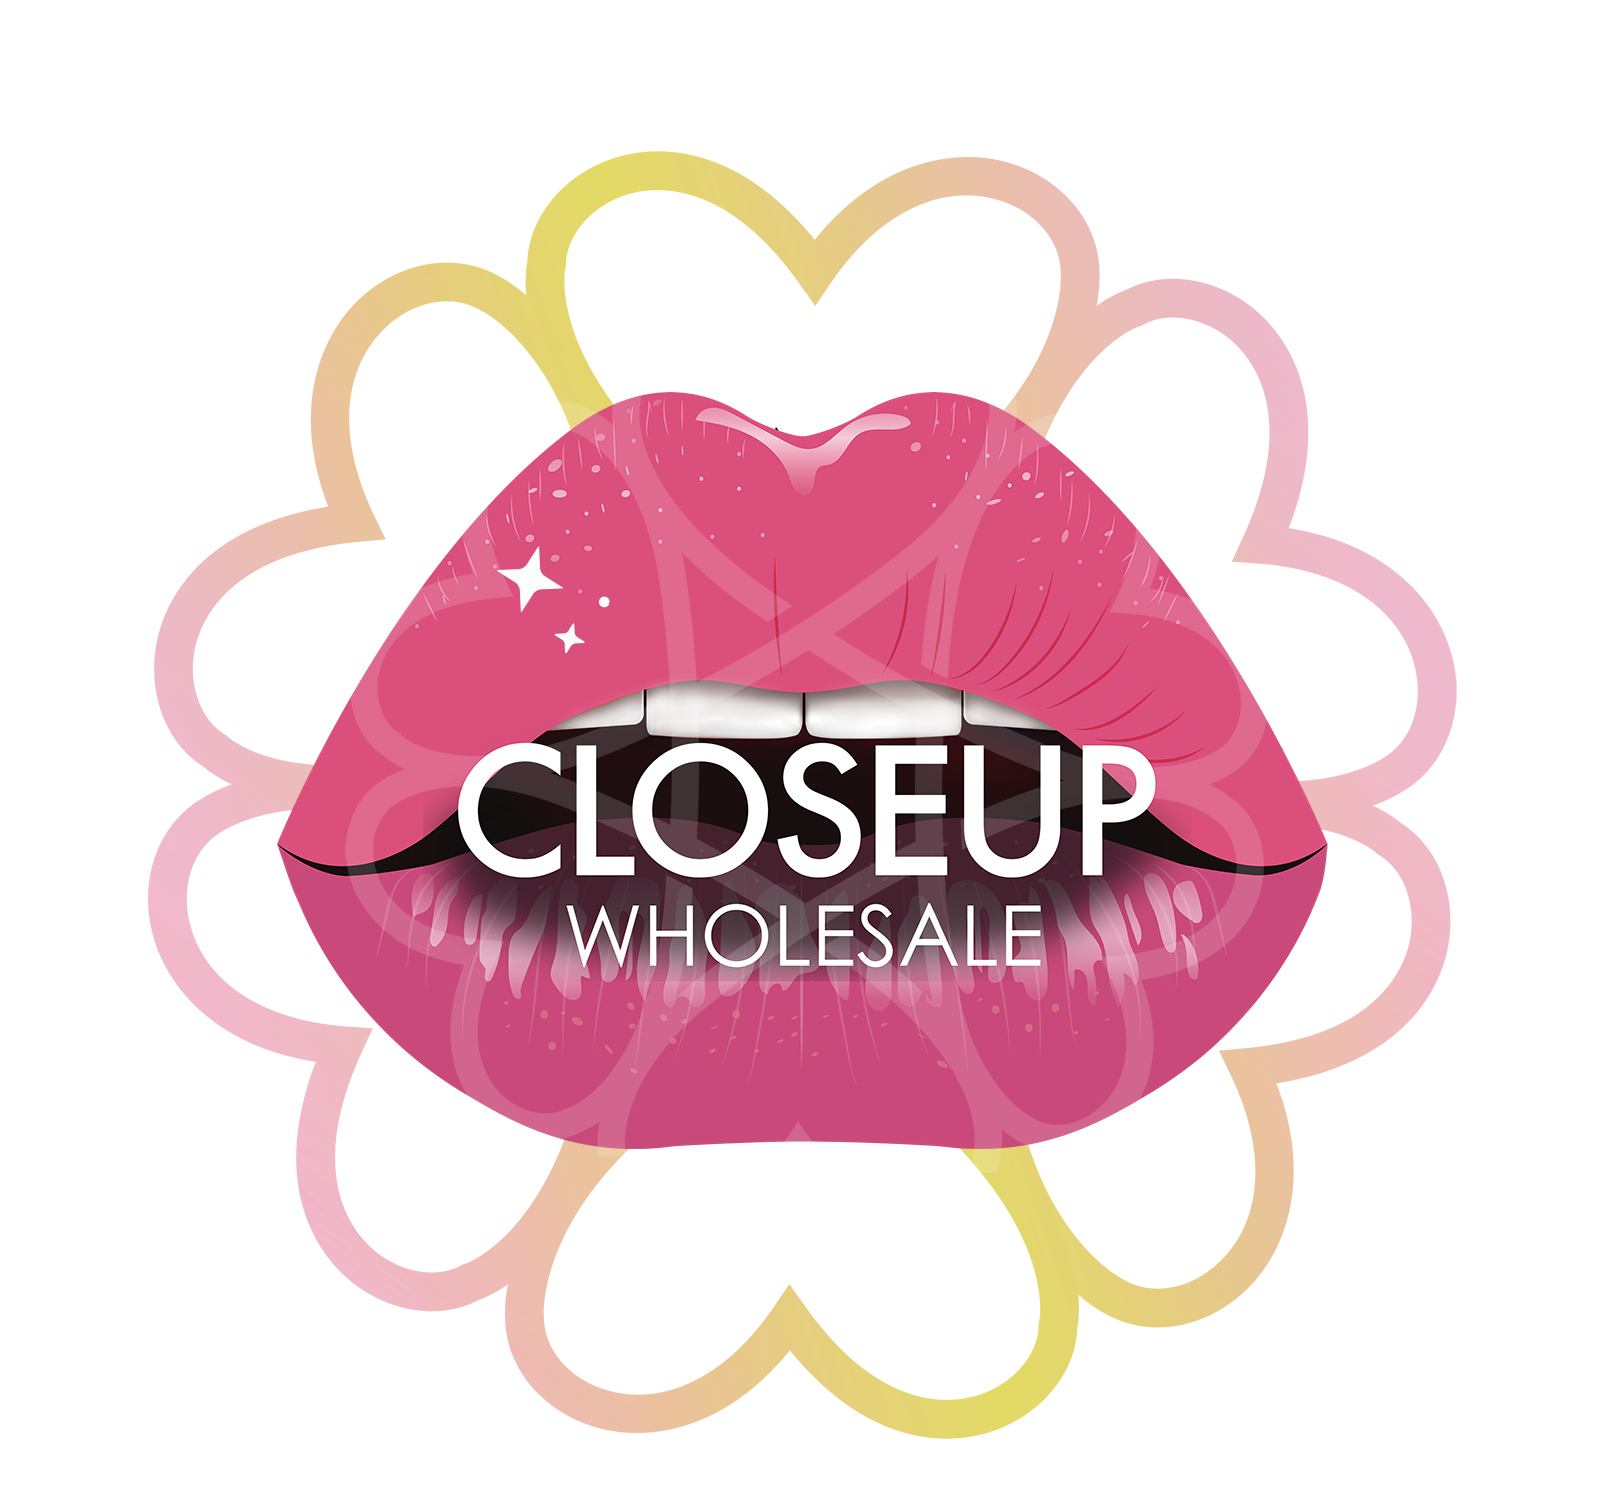 Closeup wholesale